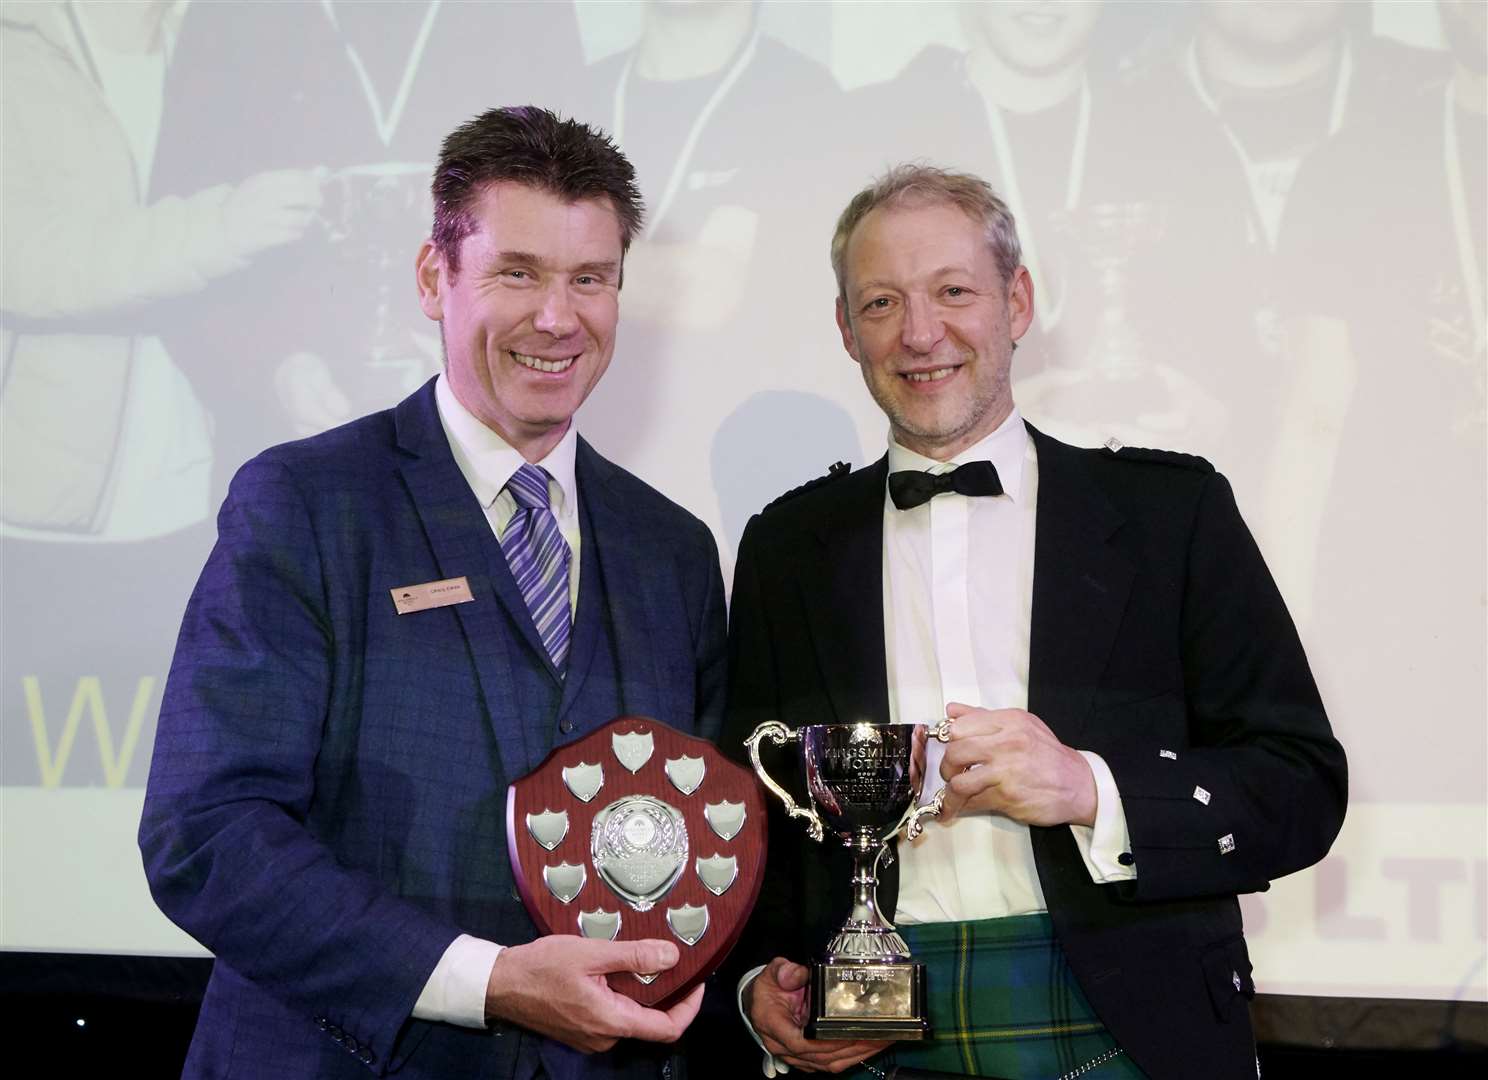 Kingsmills Hotel’s Craig Ewan presents the HCPD Karting Challenge Prize to Adrian Johnstone of GF Job.